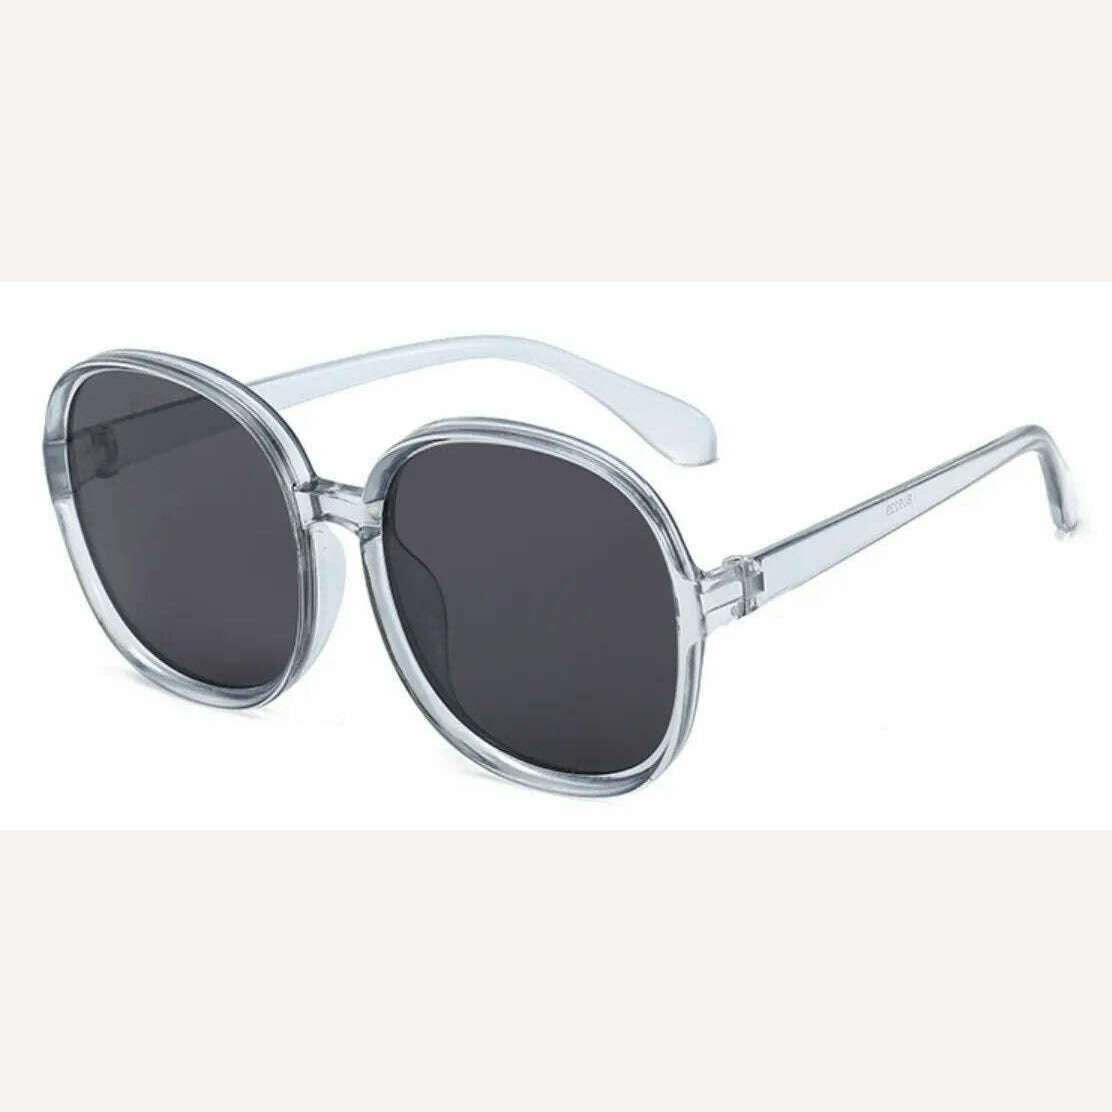 KIMLUD, 2021 Plastic Classic Vintage Woman Sunglasses Oversized Round Frame Luxury Brand Designer Female Glasses Big Shades Oculos, Gray Gray, KIMLUD Womens Clothes